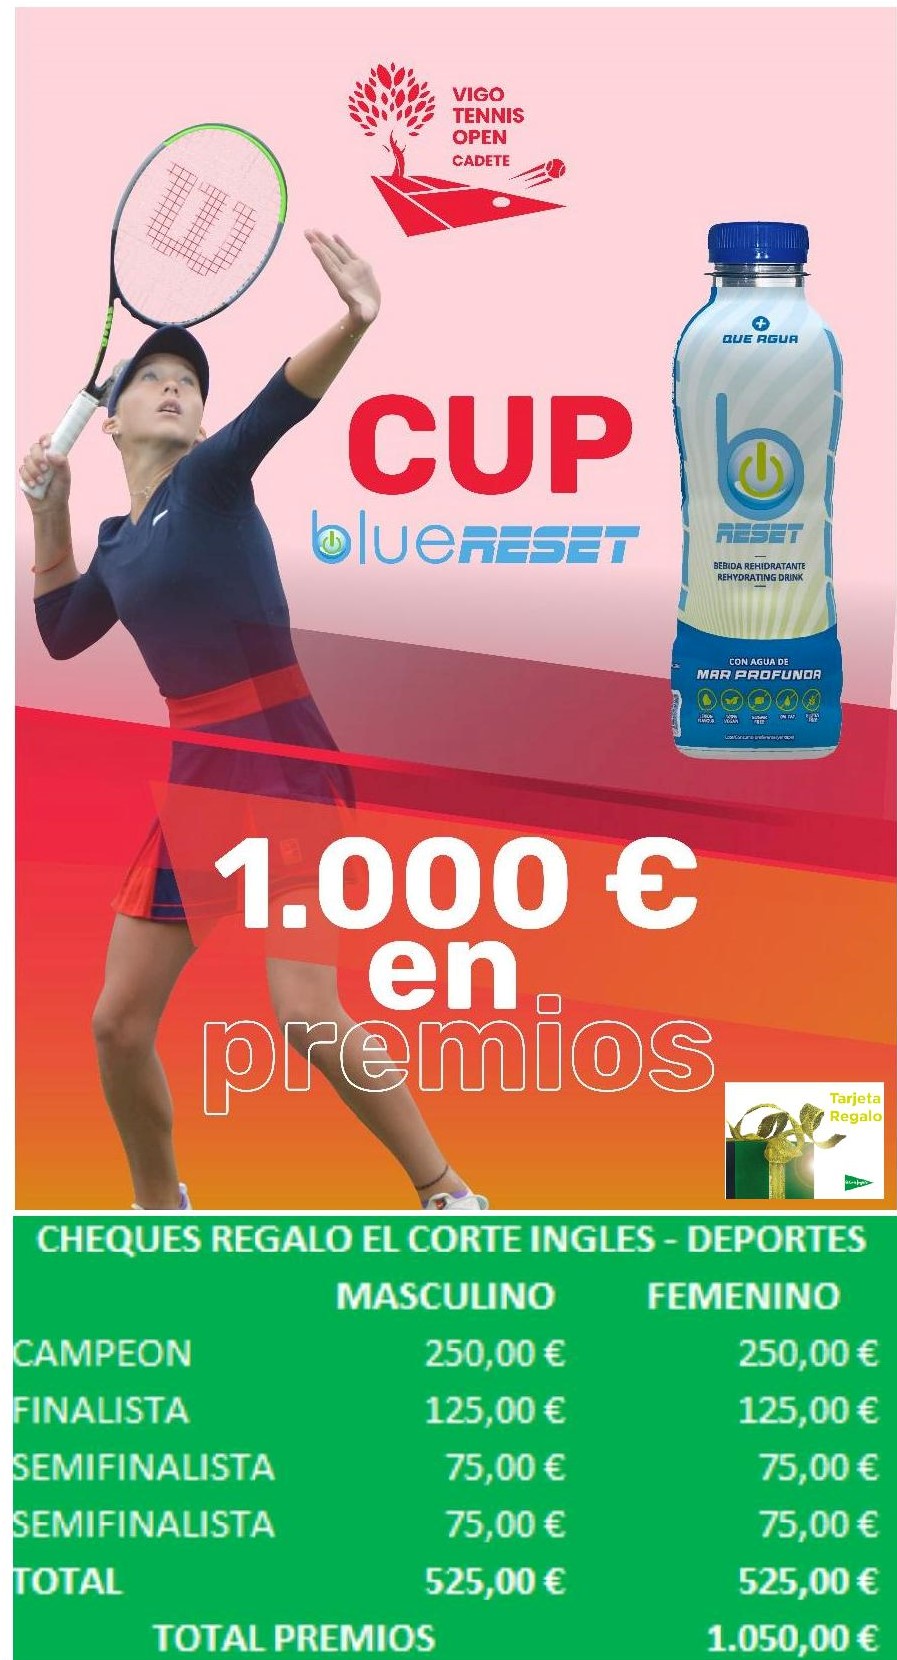 Vigo Tennis Open Cadete 2022 - BlueReset Cup